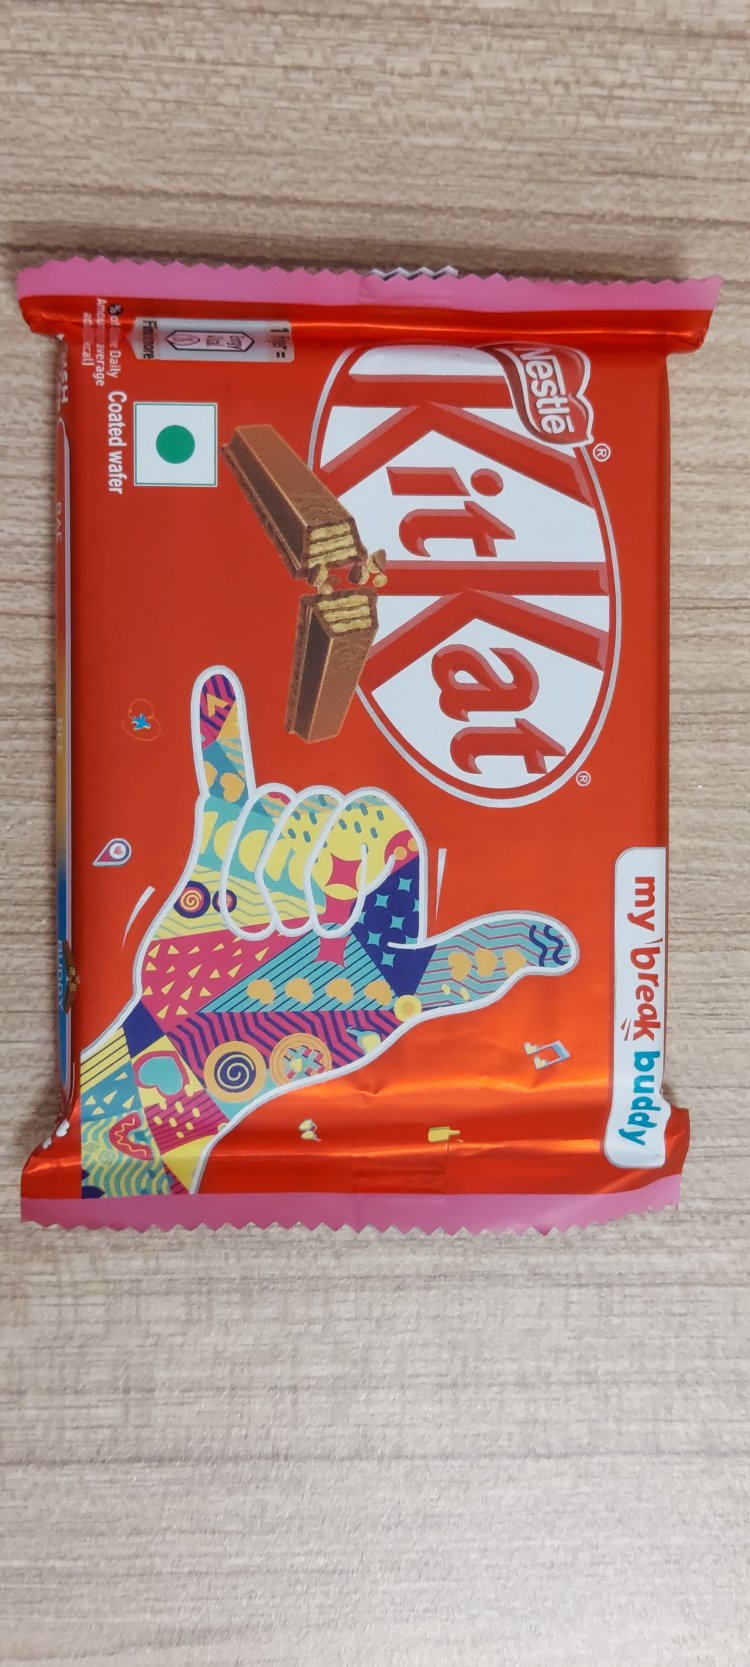 Huhtamaki prints 12 million unique packs for the Nestlé KitKat #LoveBreak series